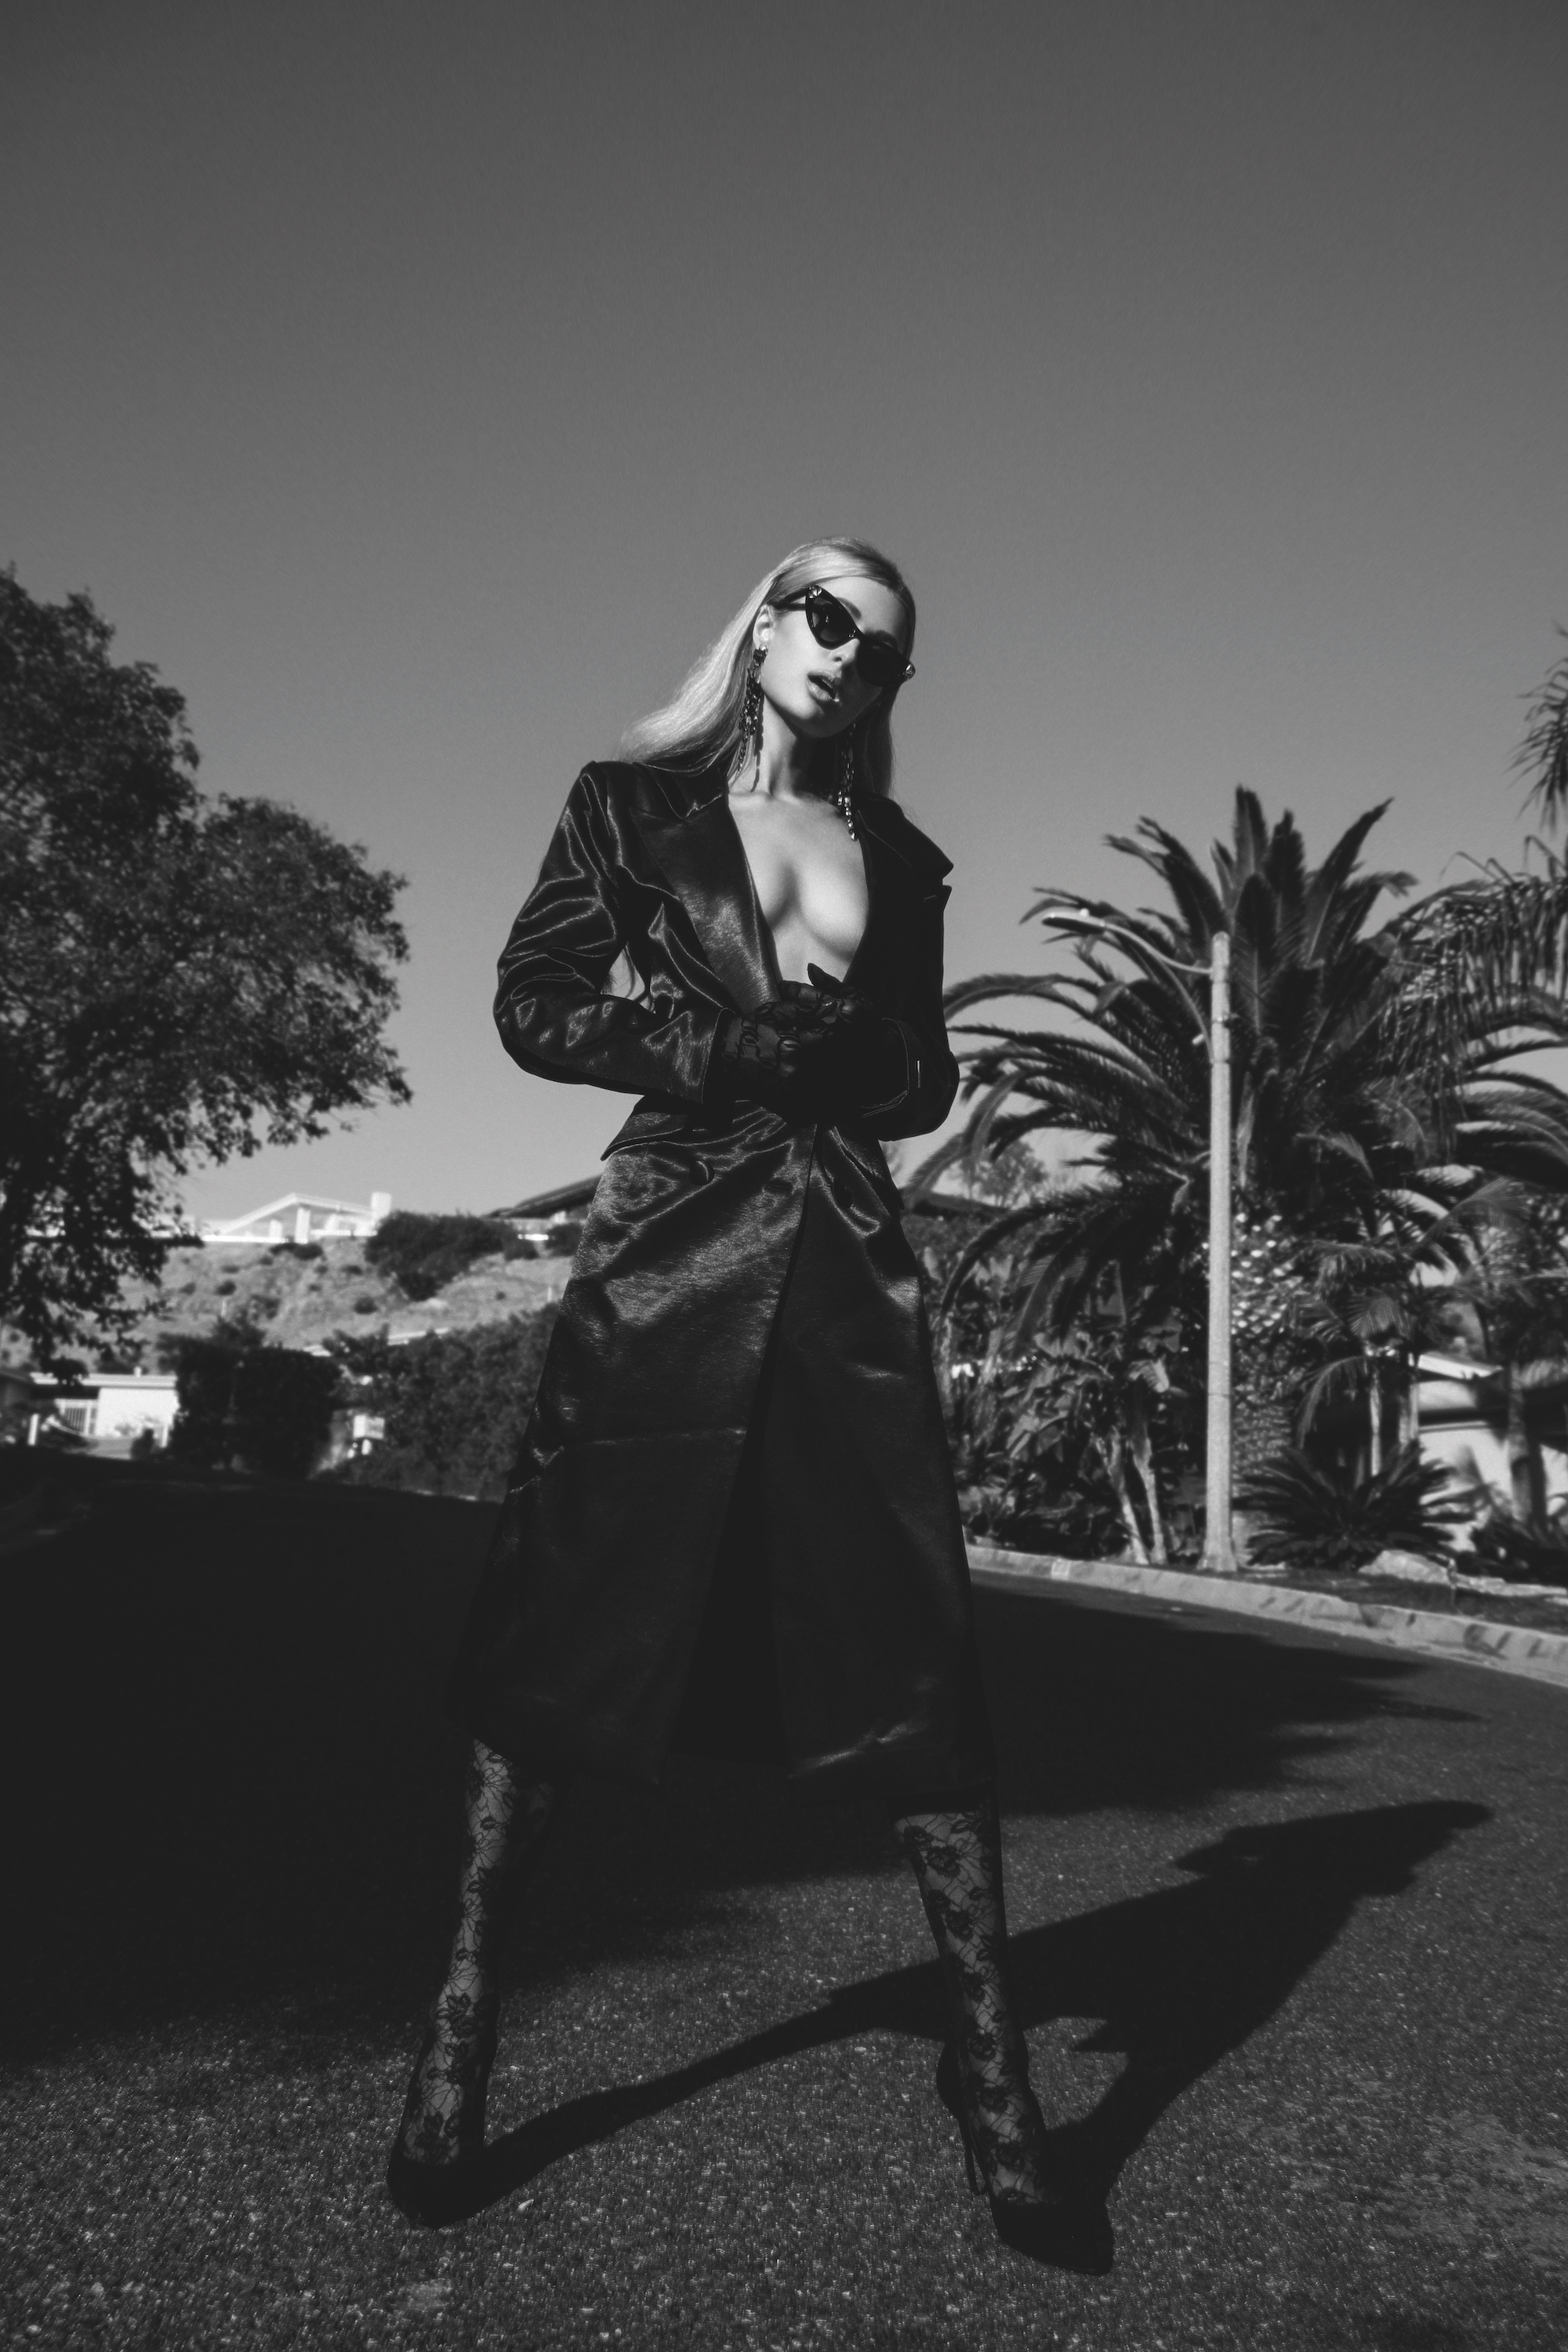 Photos n°5 : Paris Hilton Oozing Sex Appeal in New Shoot!